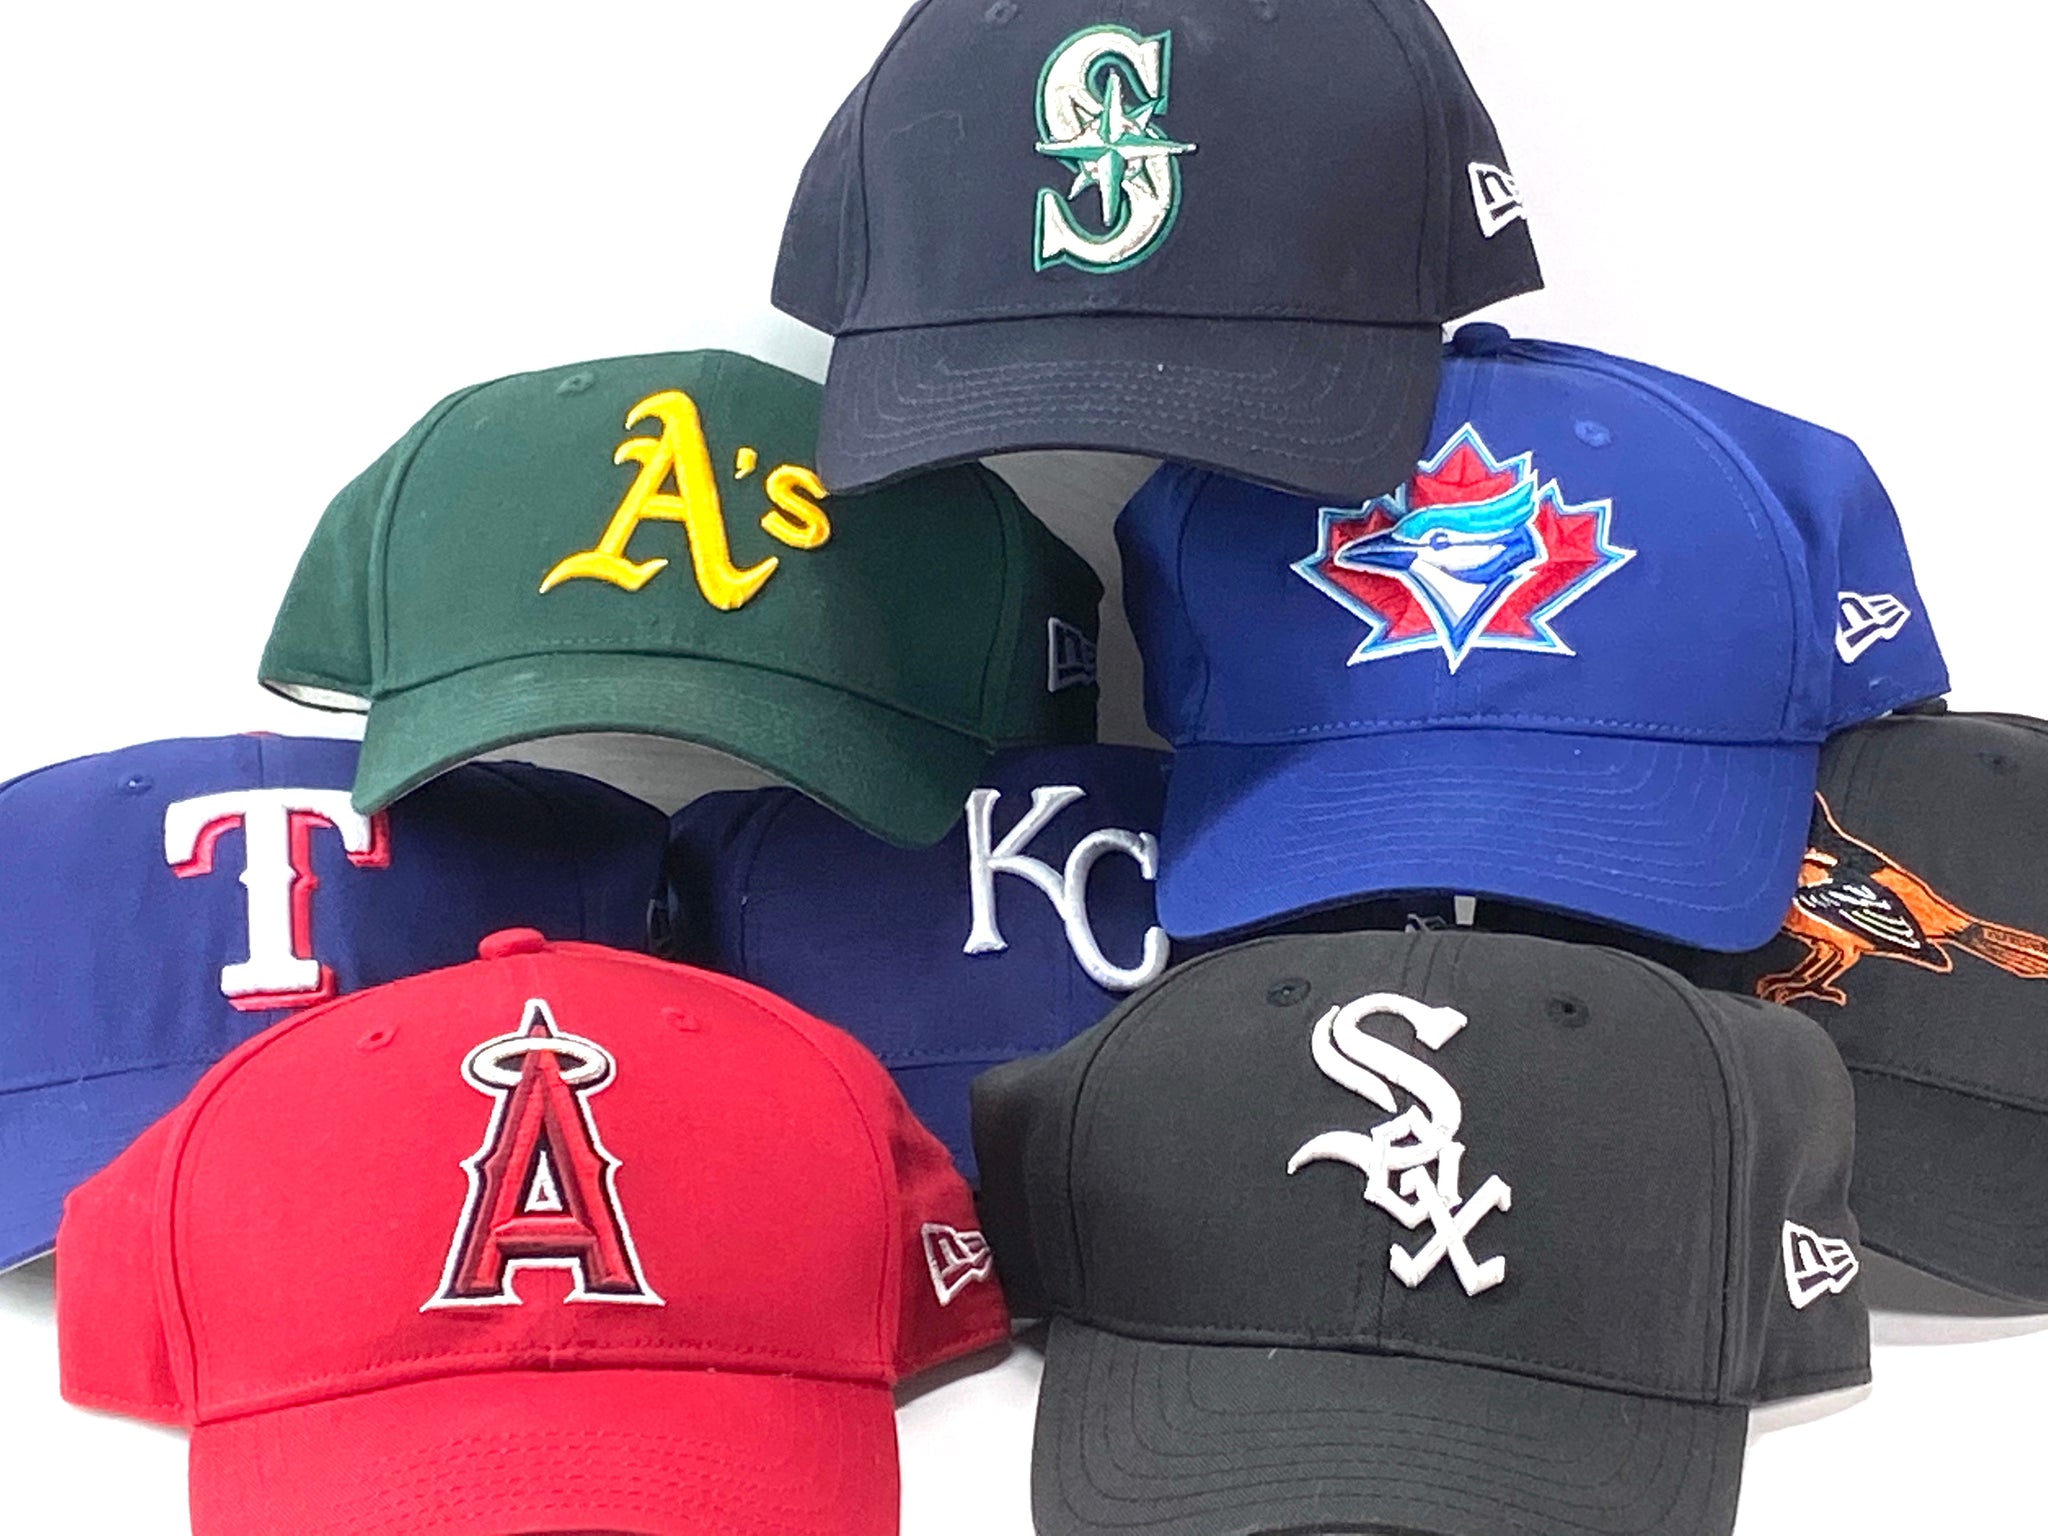 MLB Replica Baseball Caps 